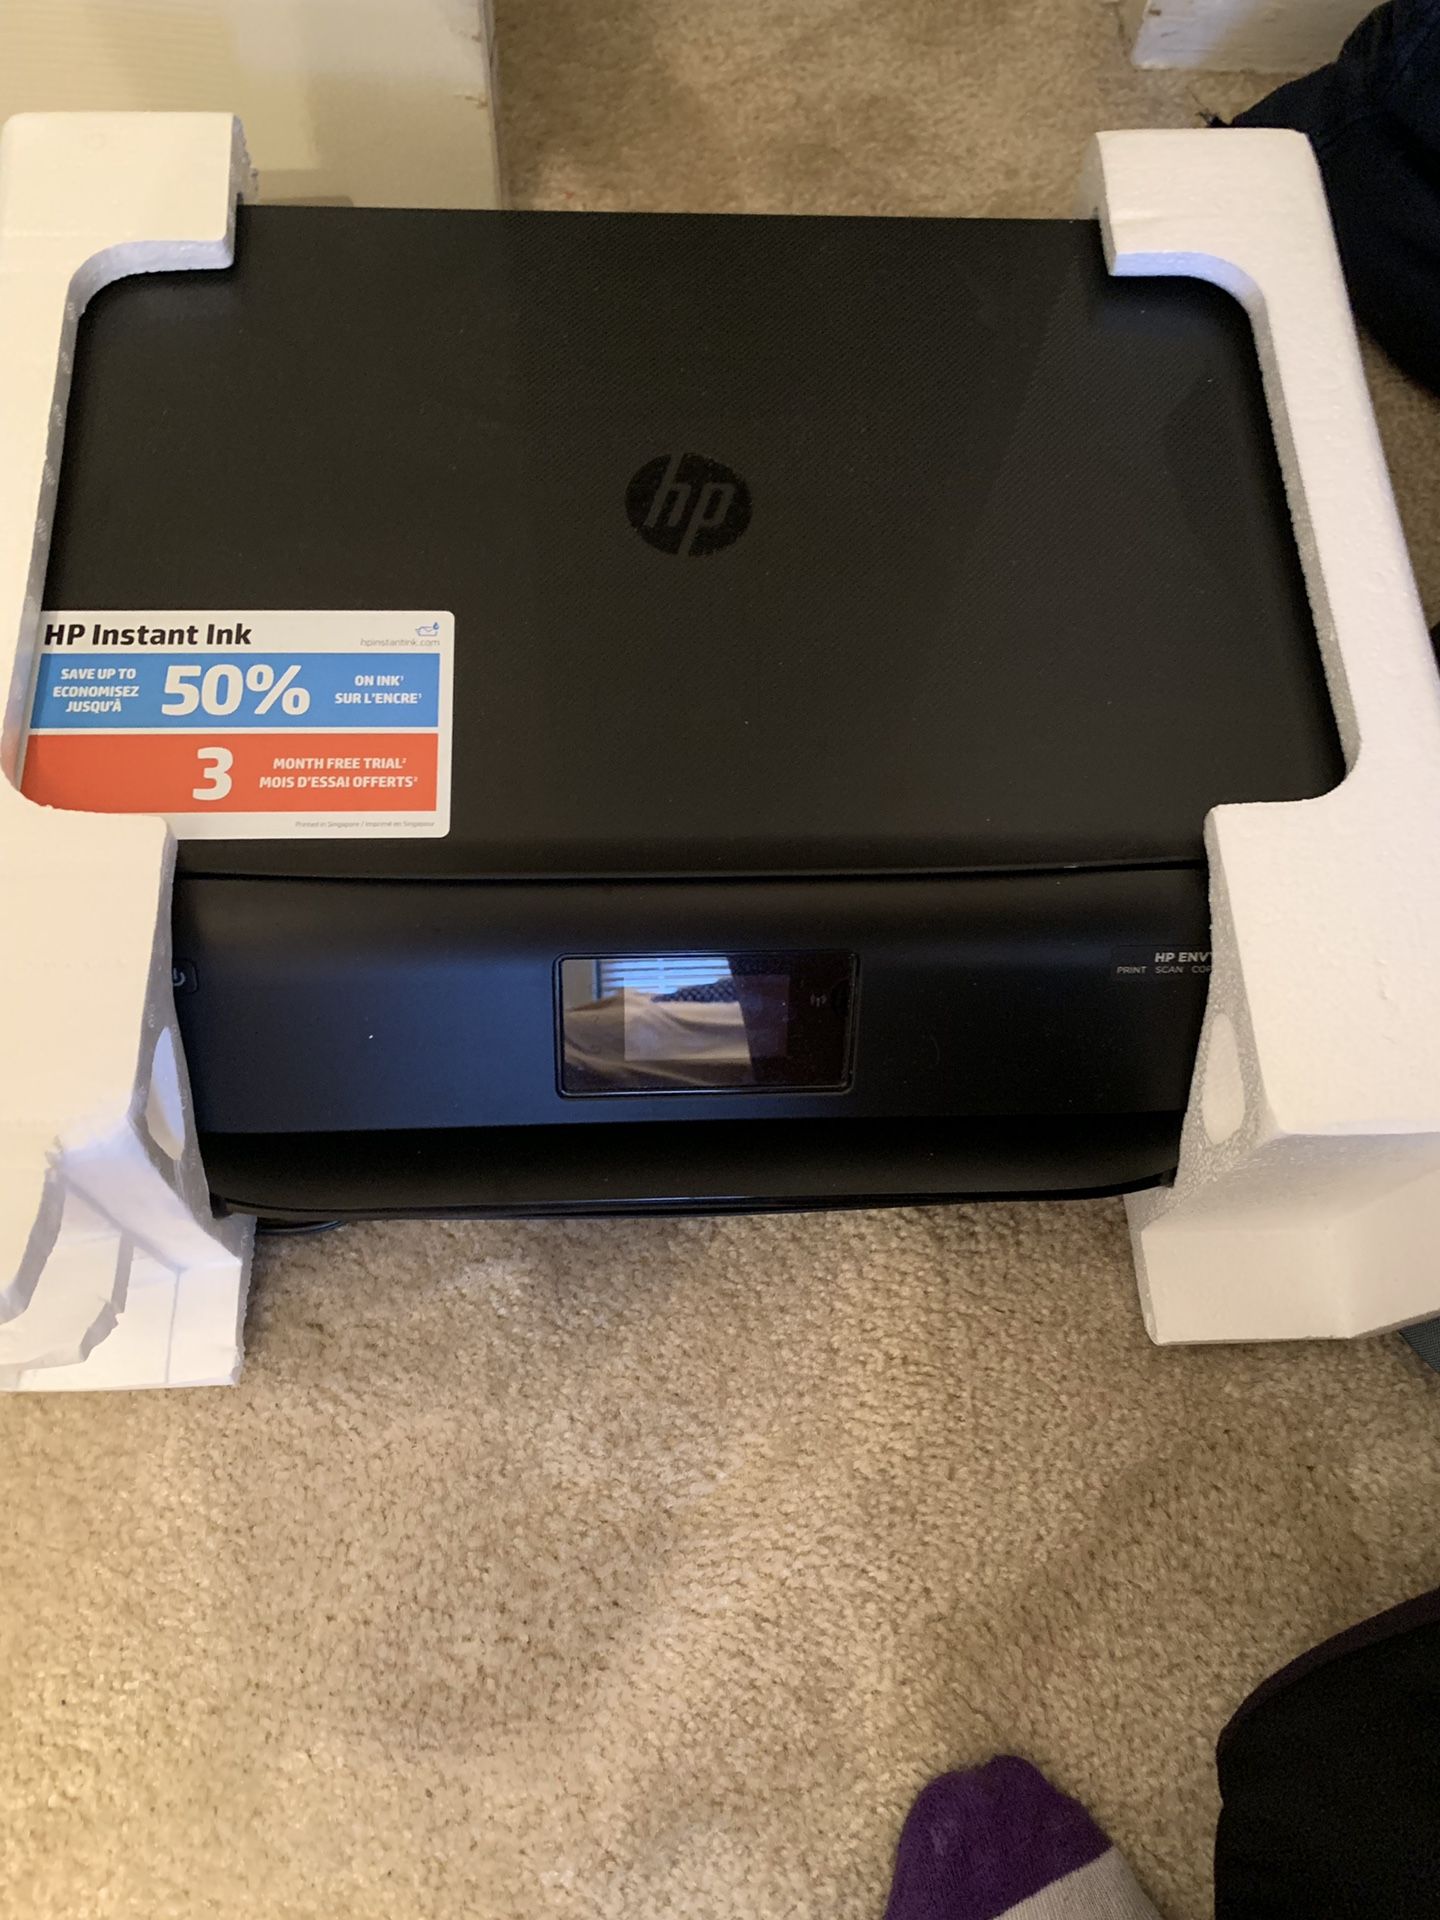 HP Envy 4520 printer